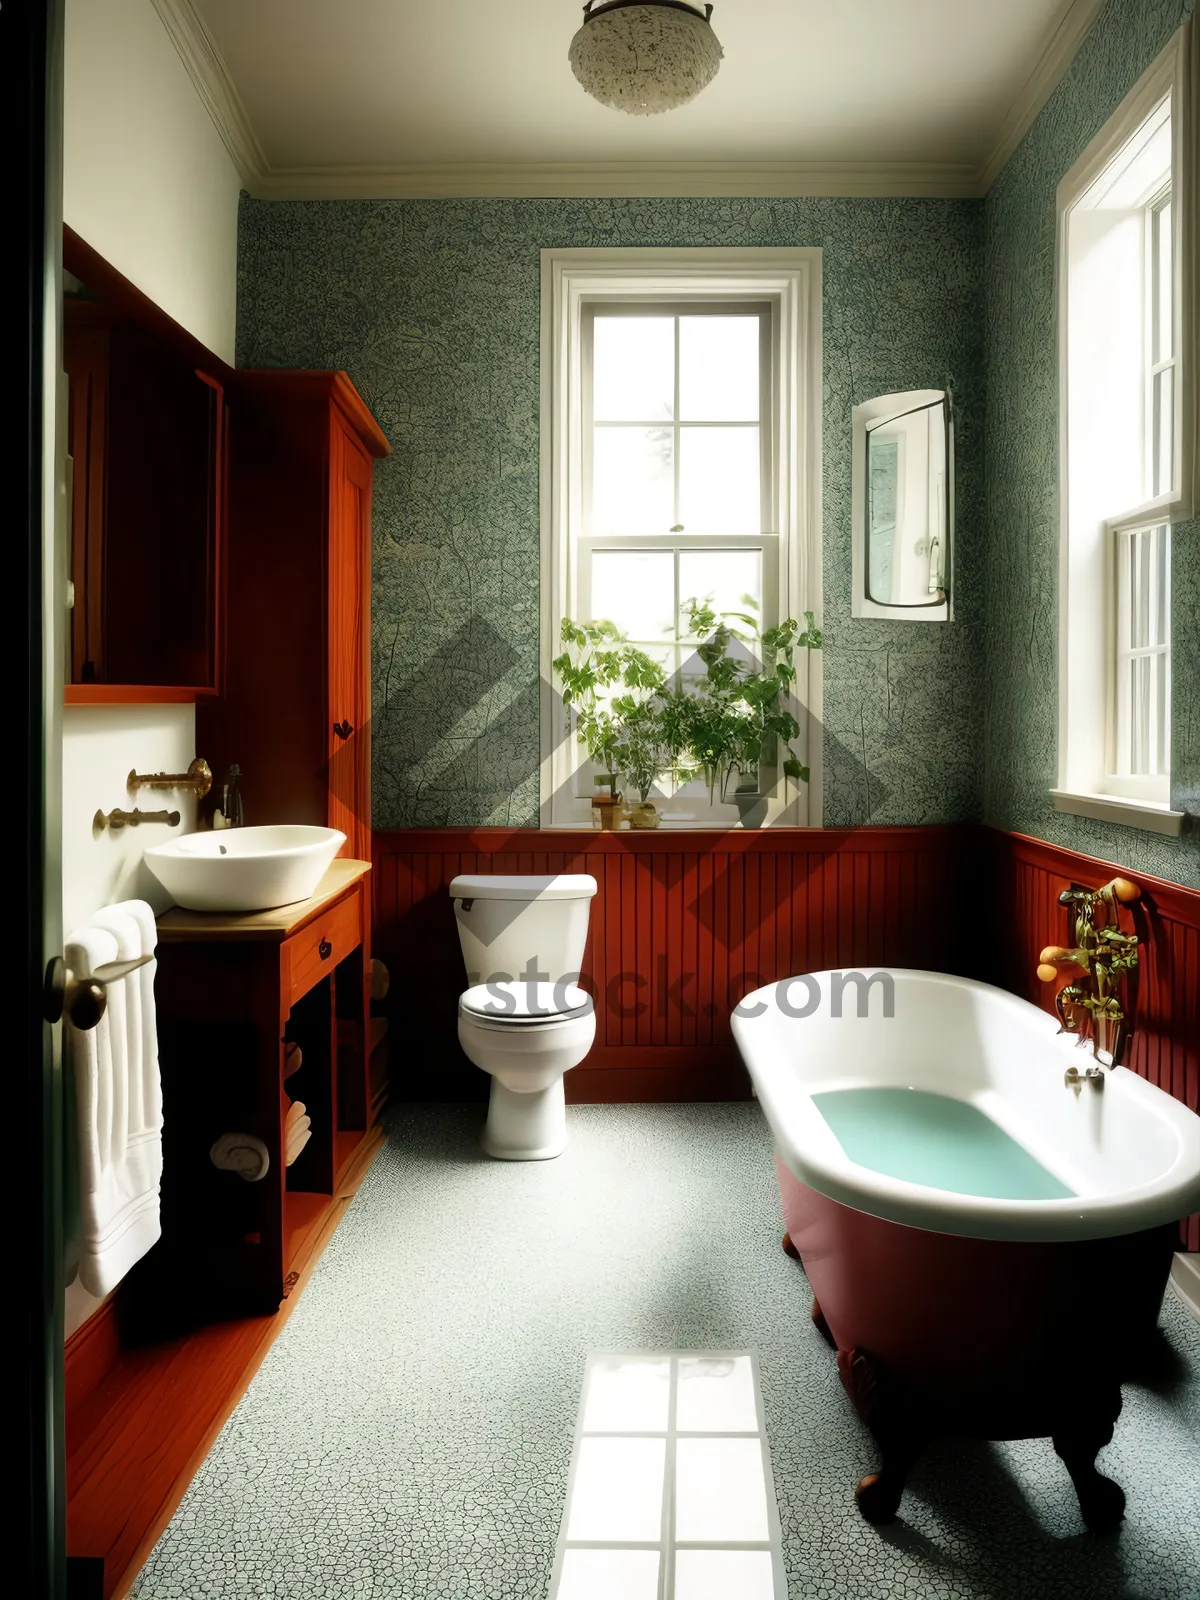 Picture of Sleek and Stylish Modern Bathroom Interior Design